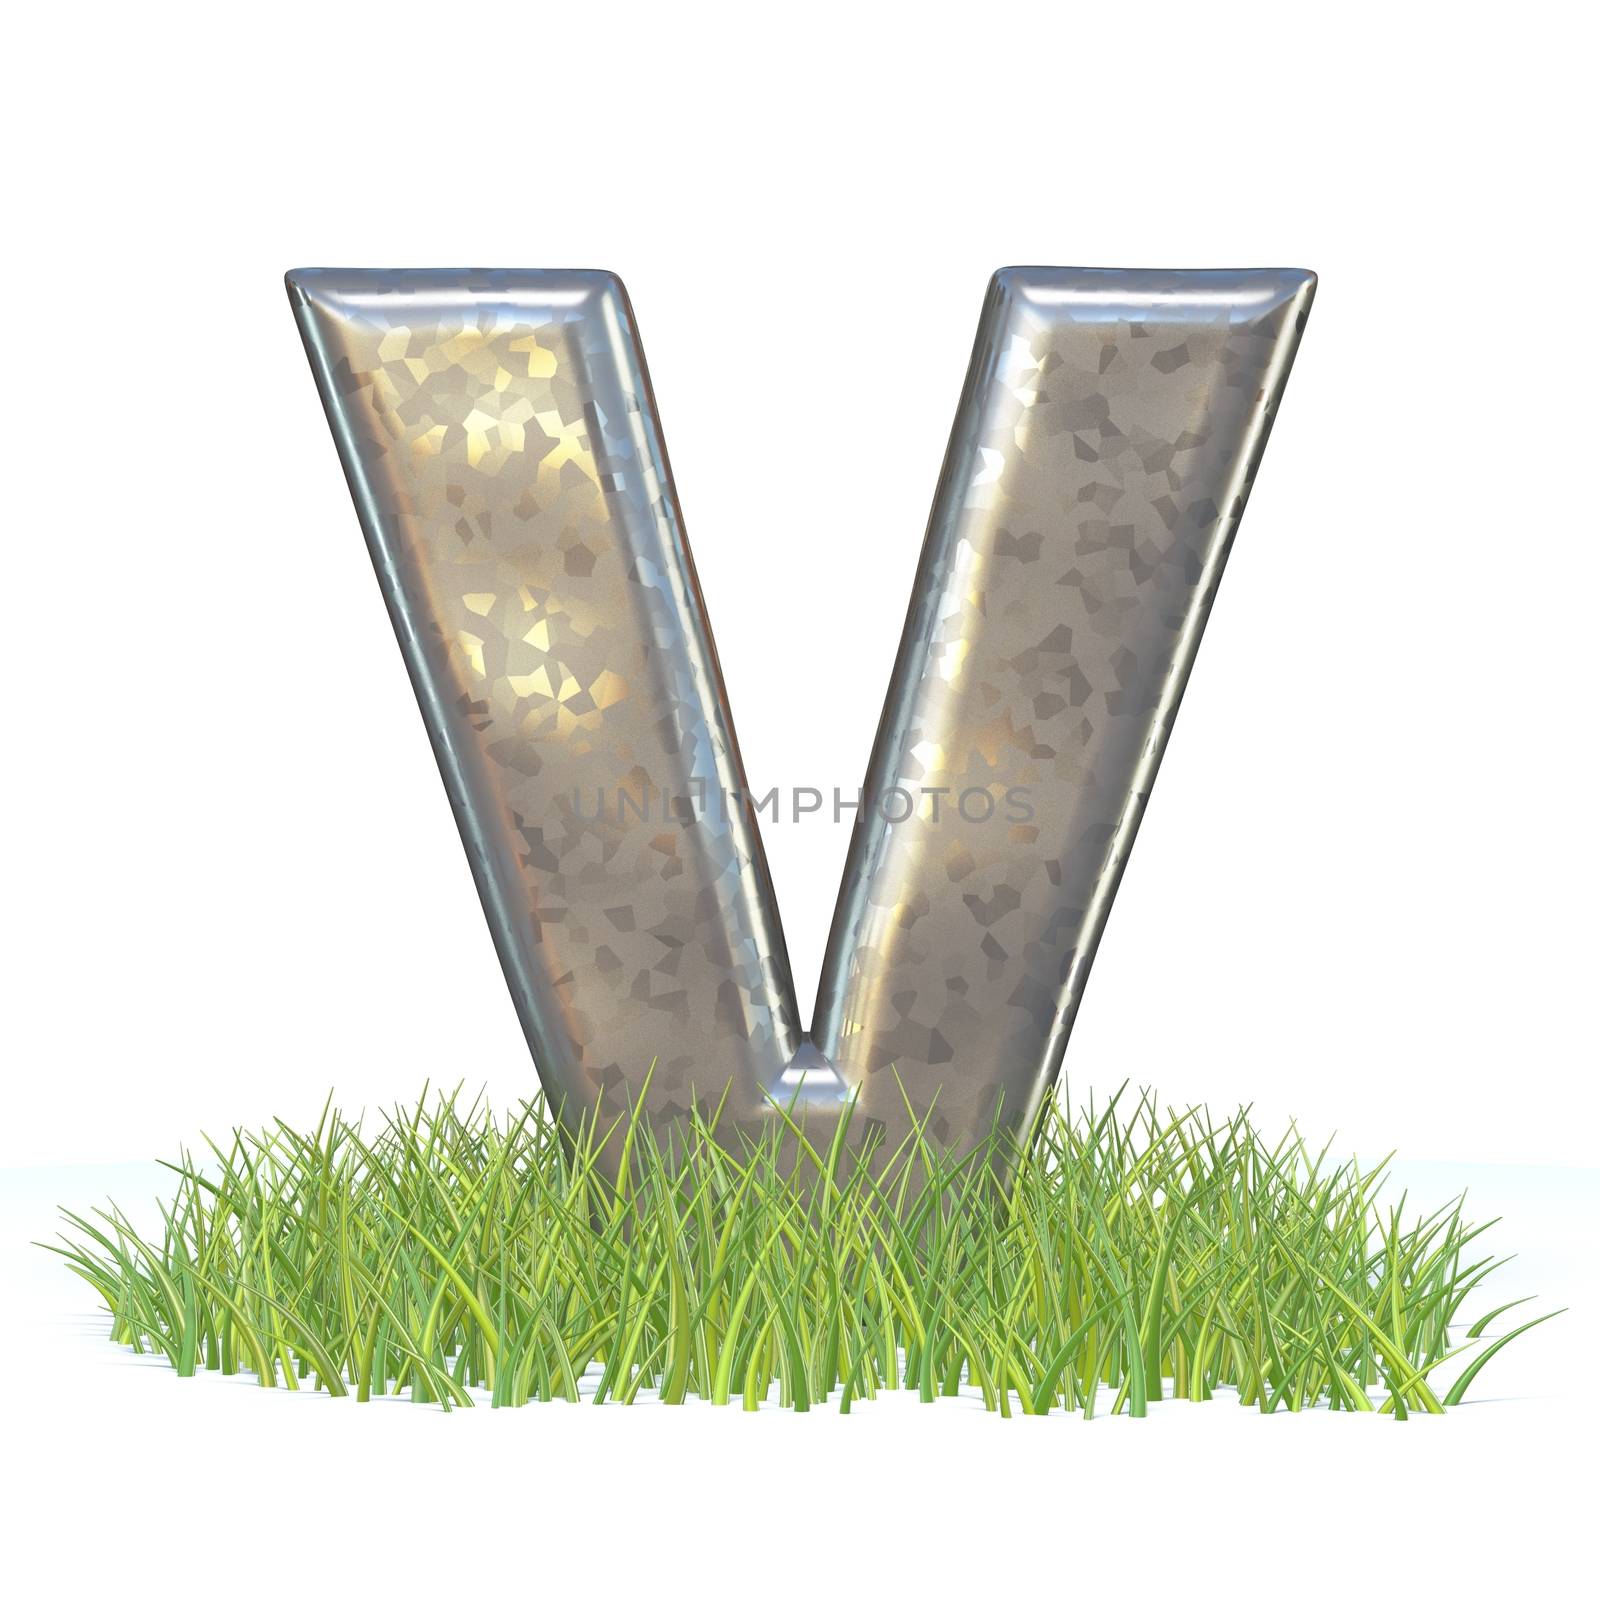 Galvanized metal font Letter V in grass 3D render illustration isolated on white background